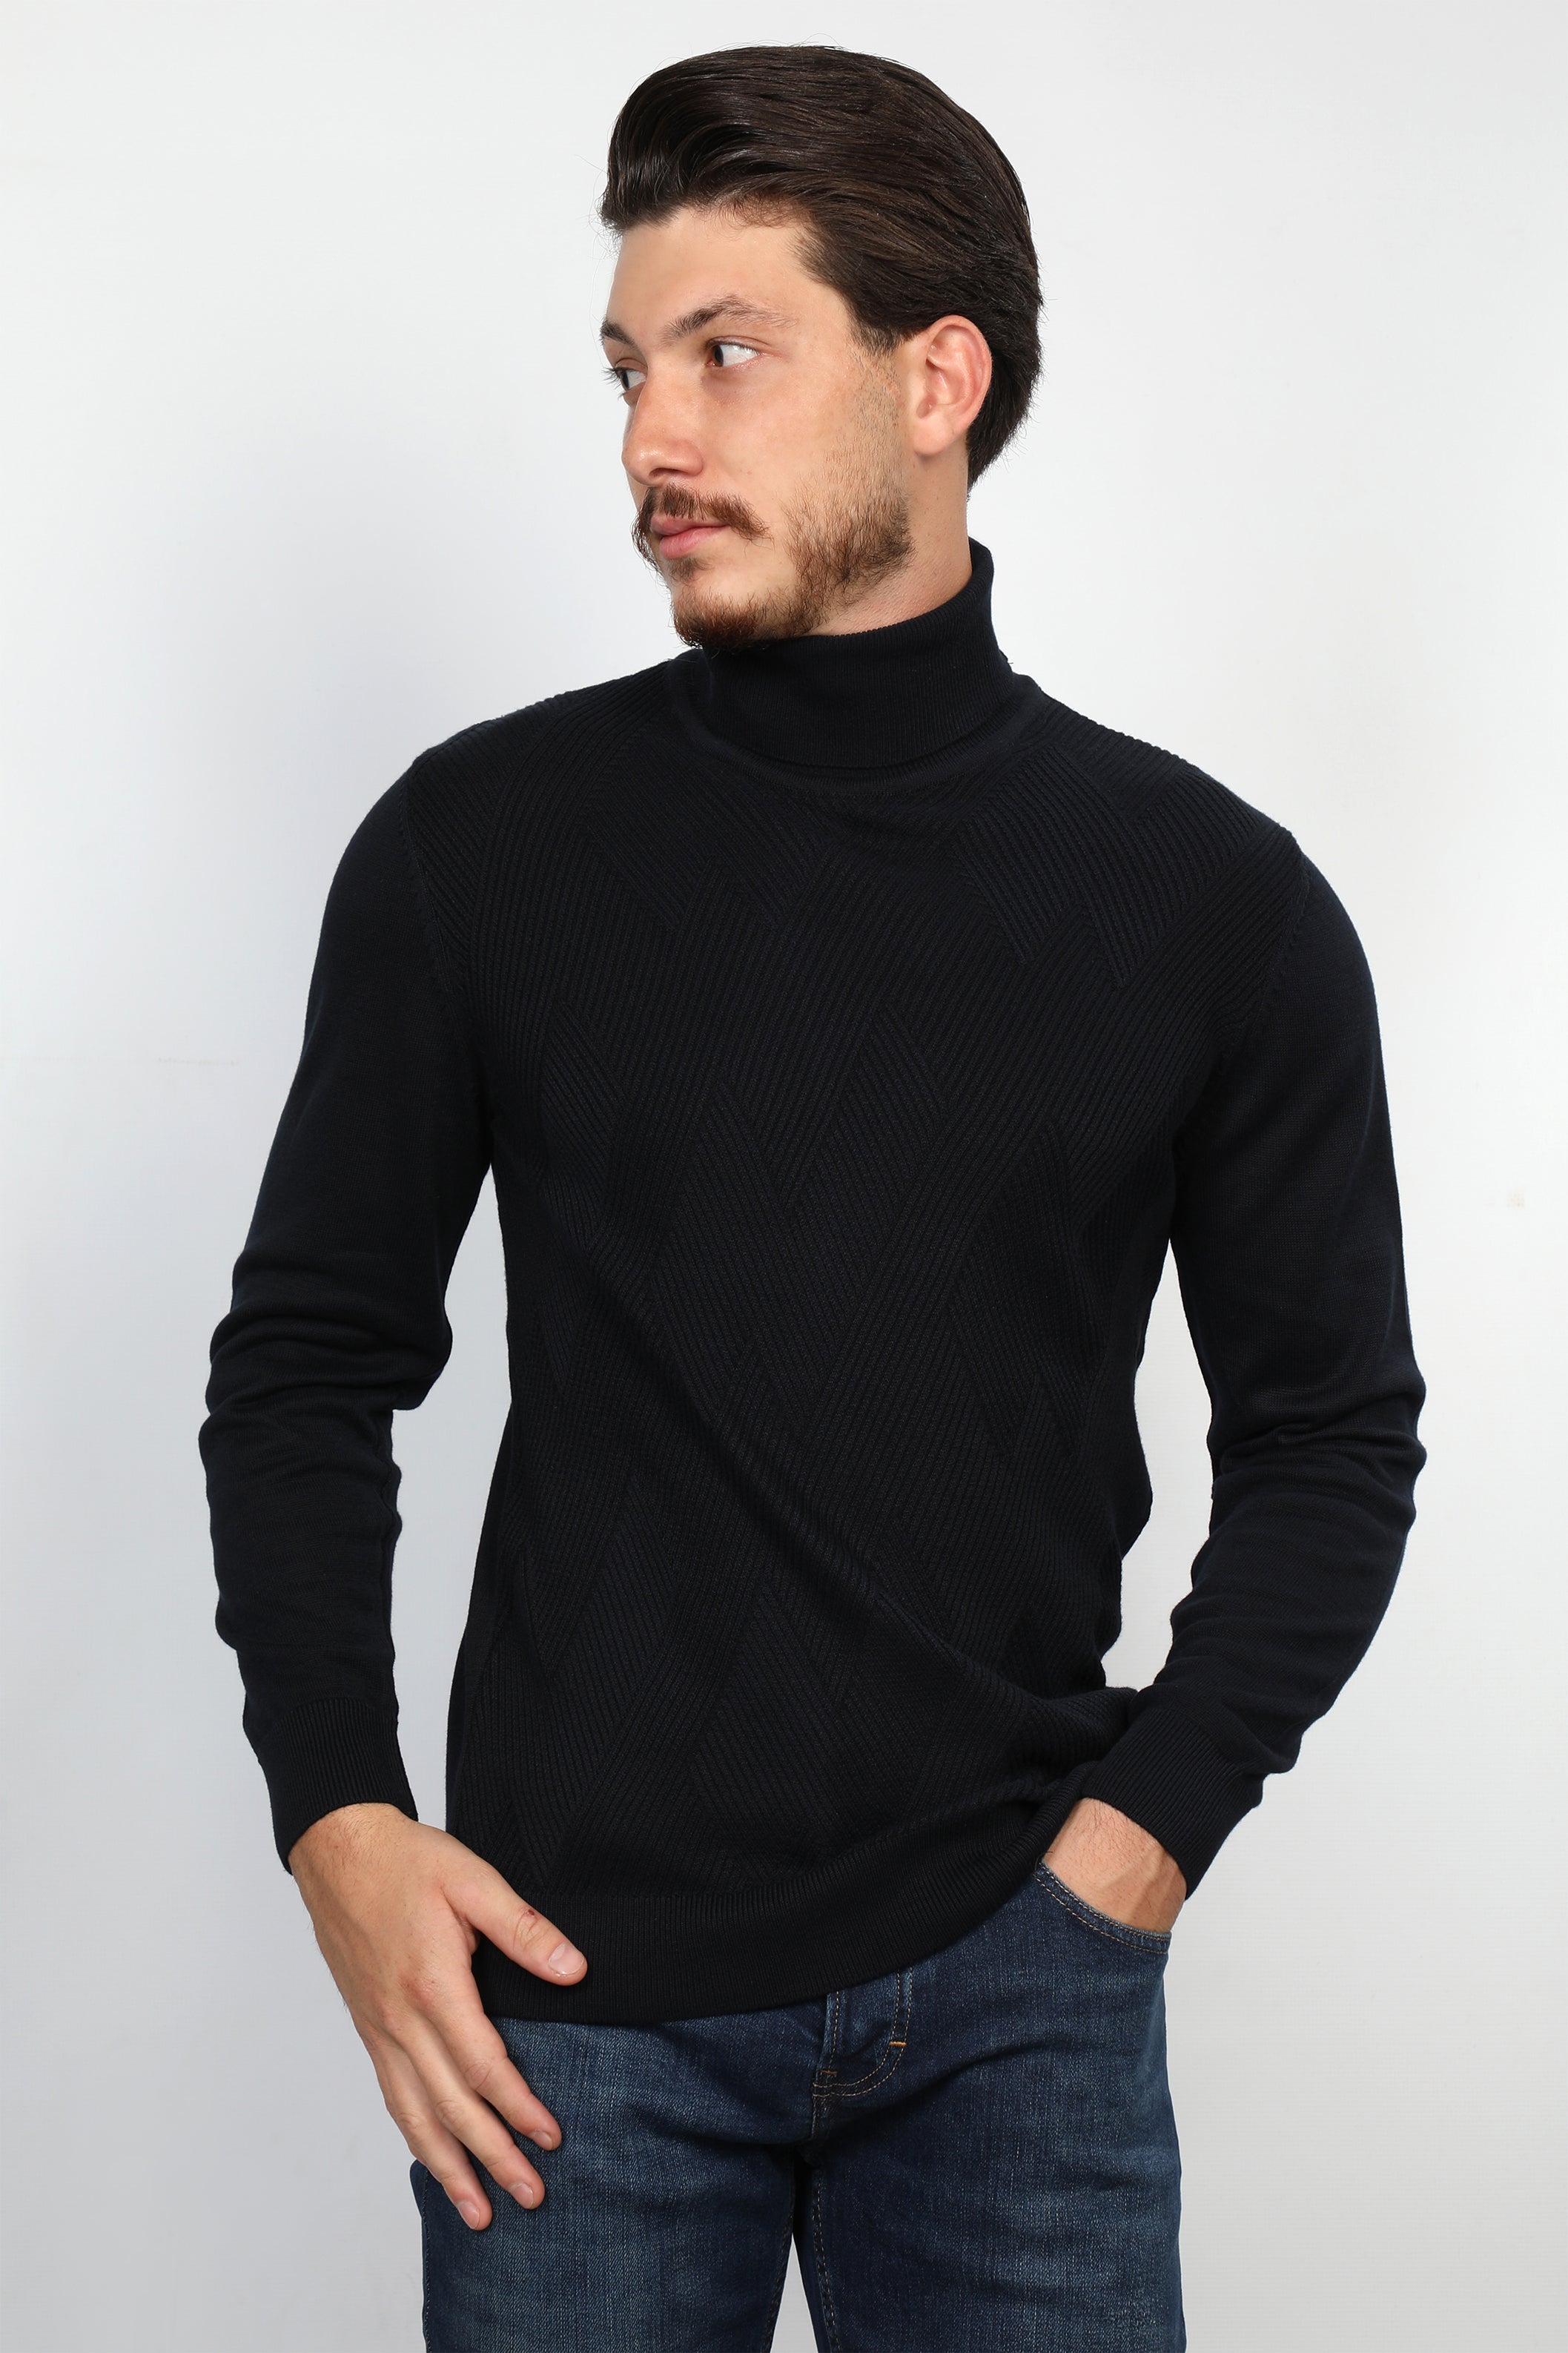 Men Classy Navy Turtle Neck Patterned Sweater